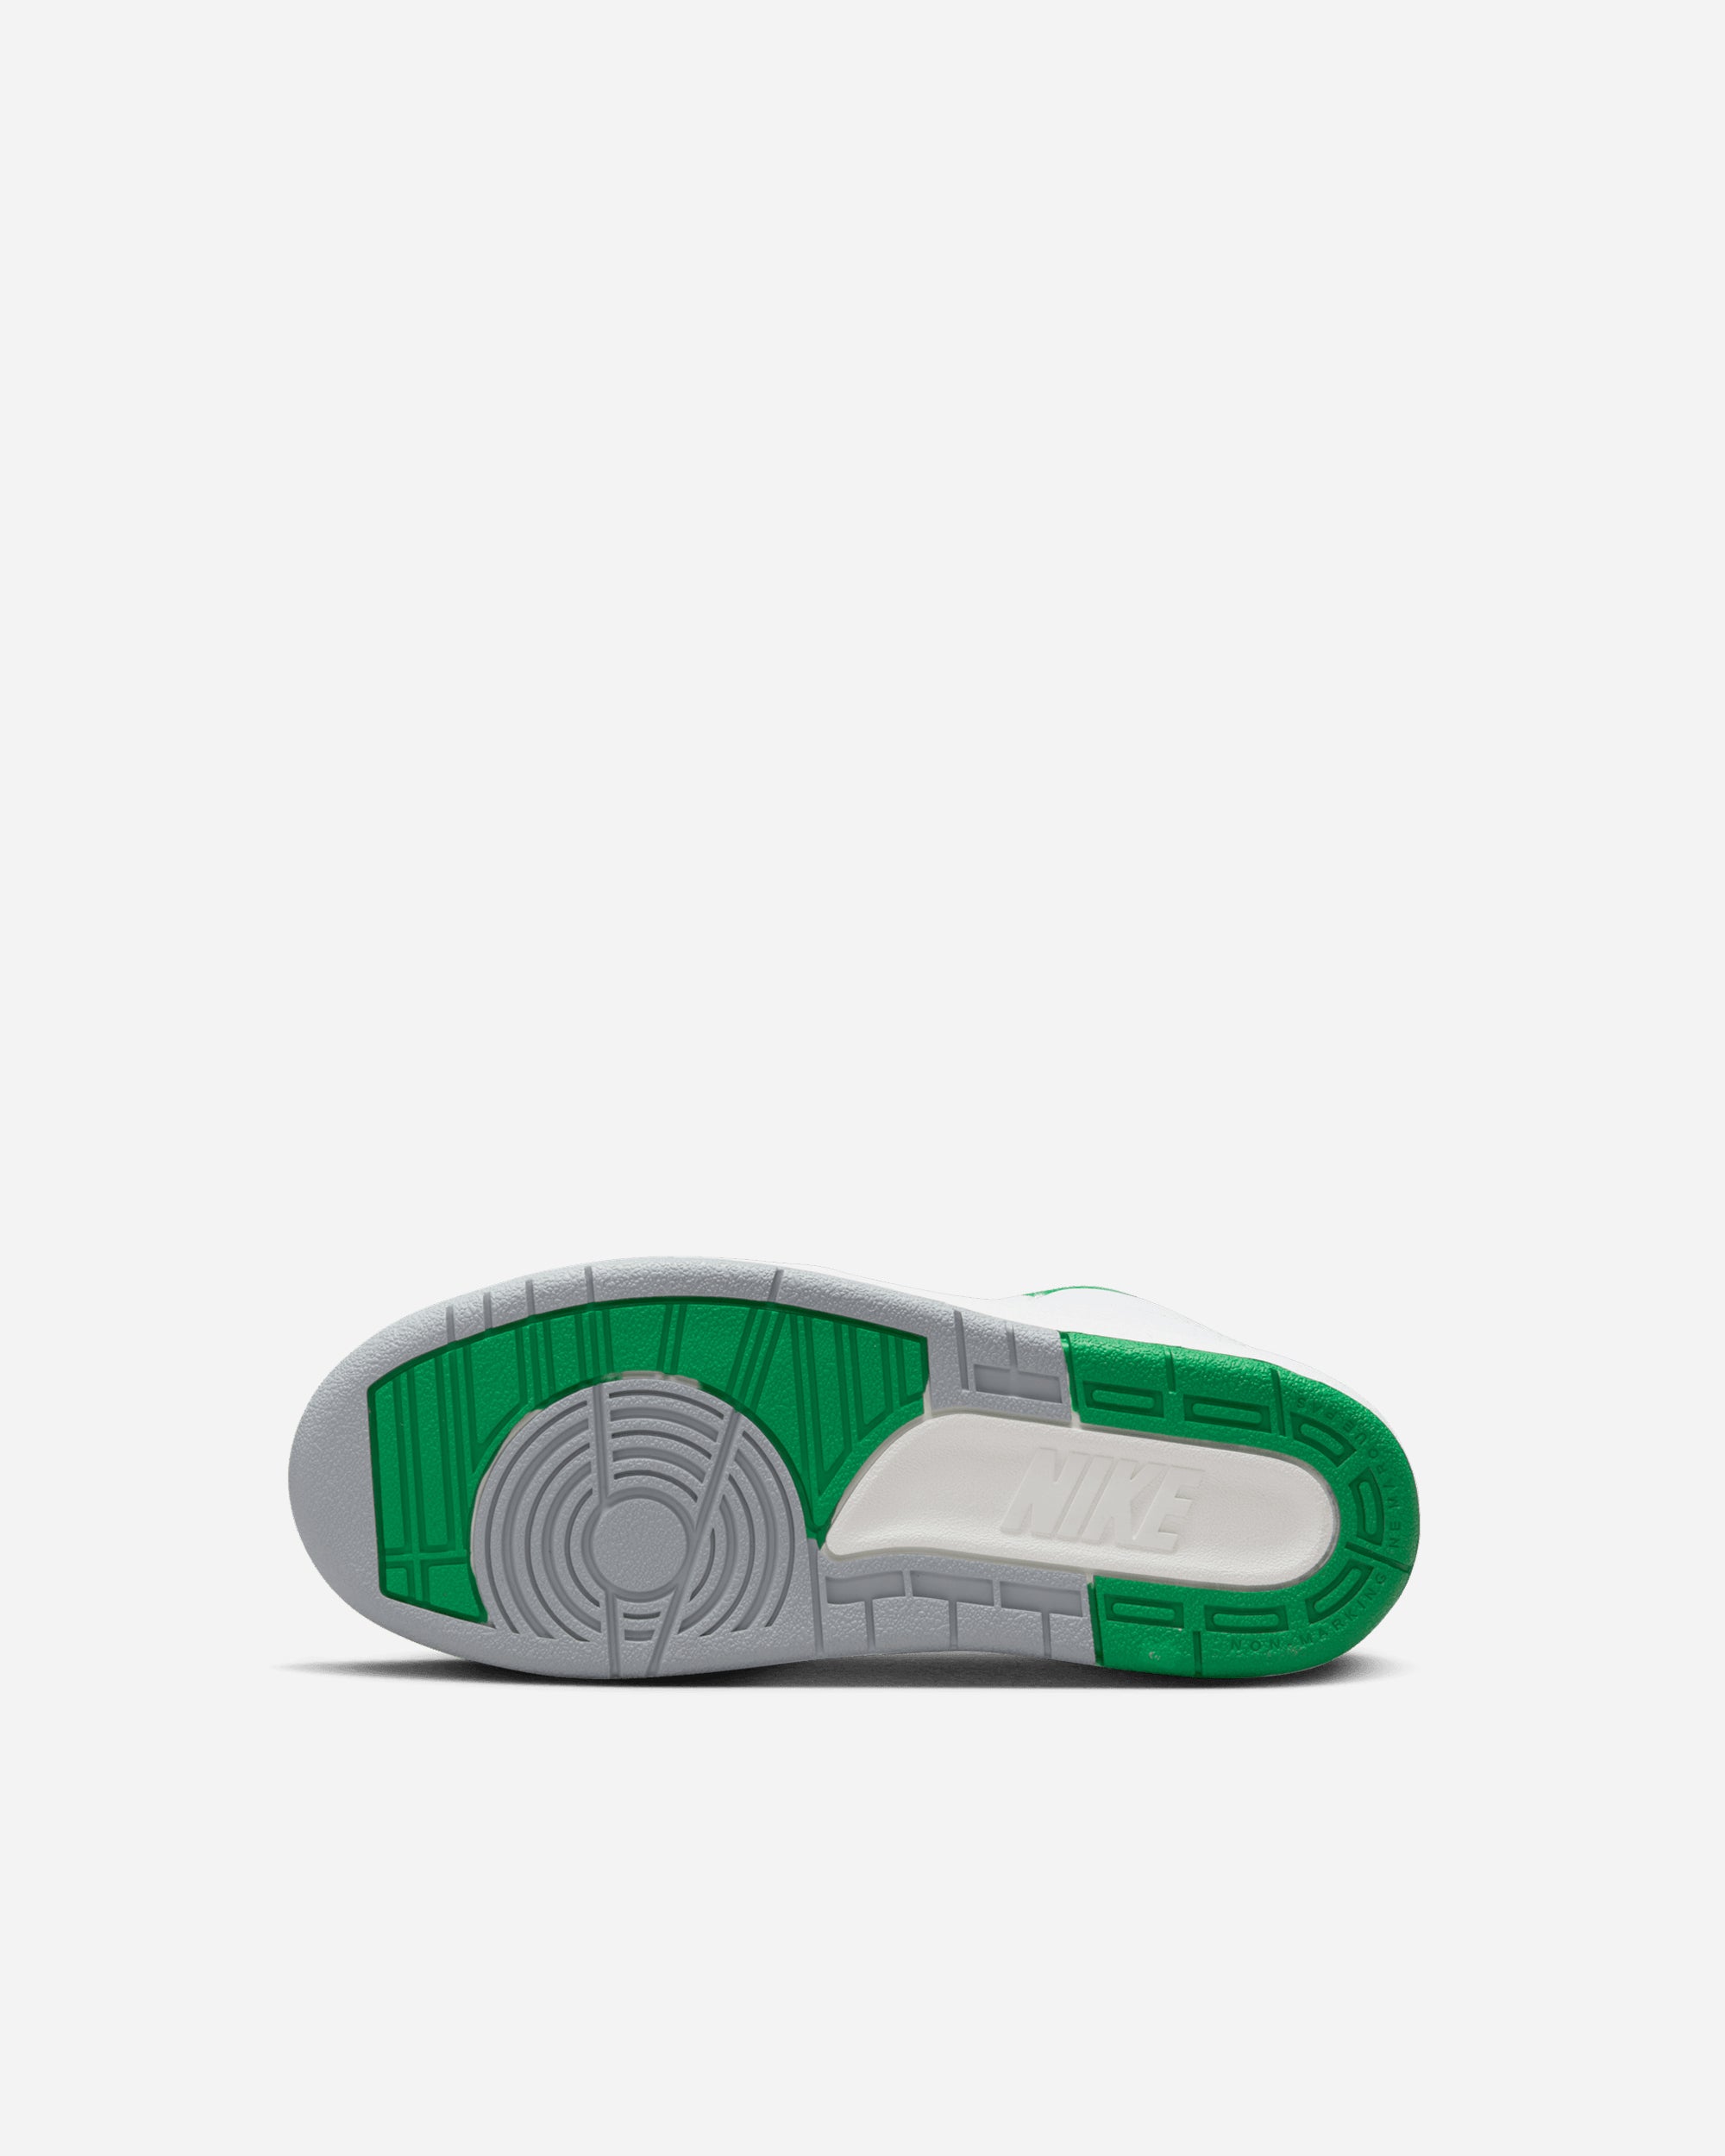 Jordan Brand Jordan 2 Retro 'Lucky Green' (Preschool) WHITE/LUCKY GREEN-SAIL-LT STEE DQ8564-103